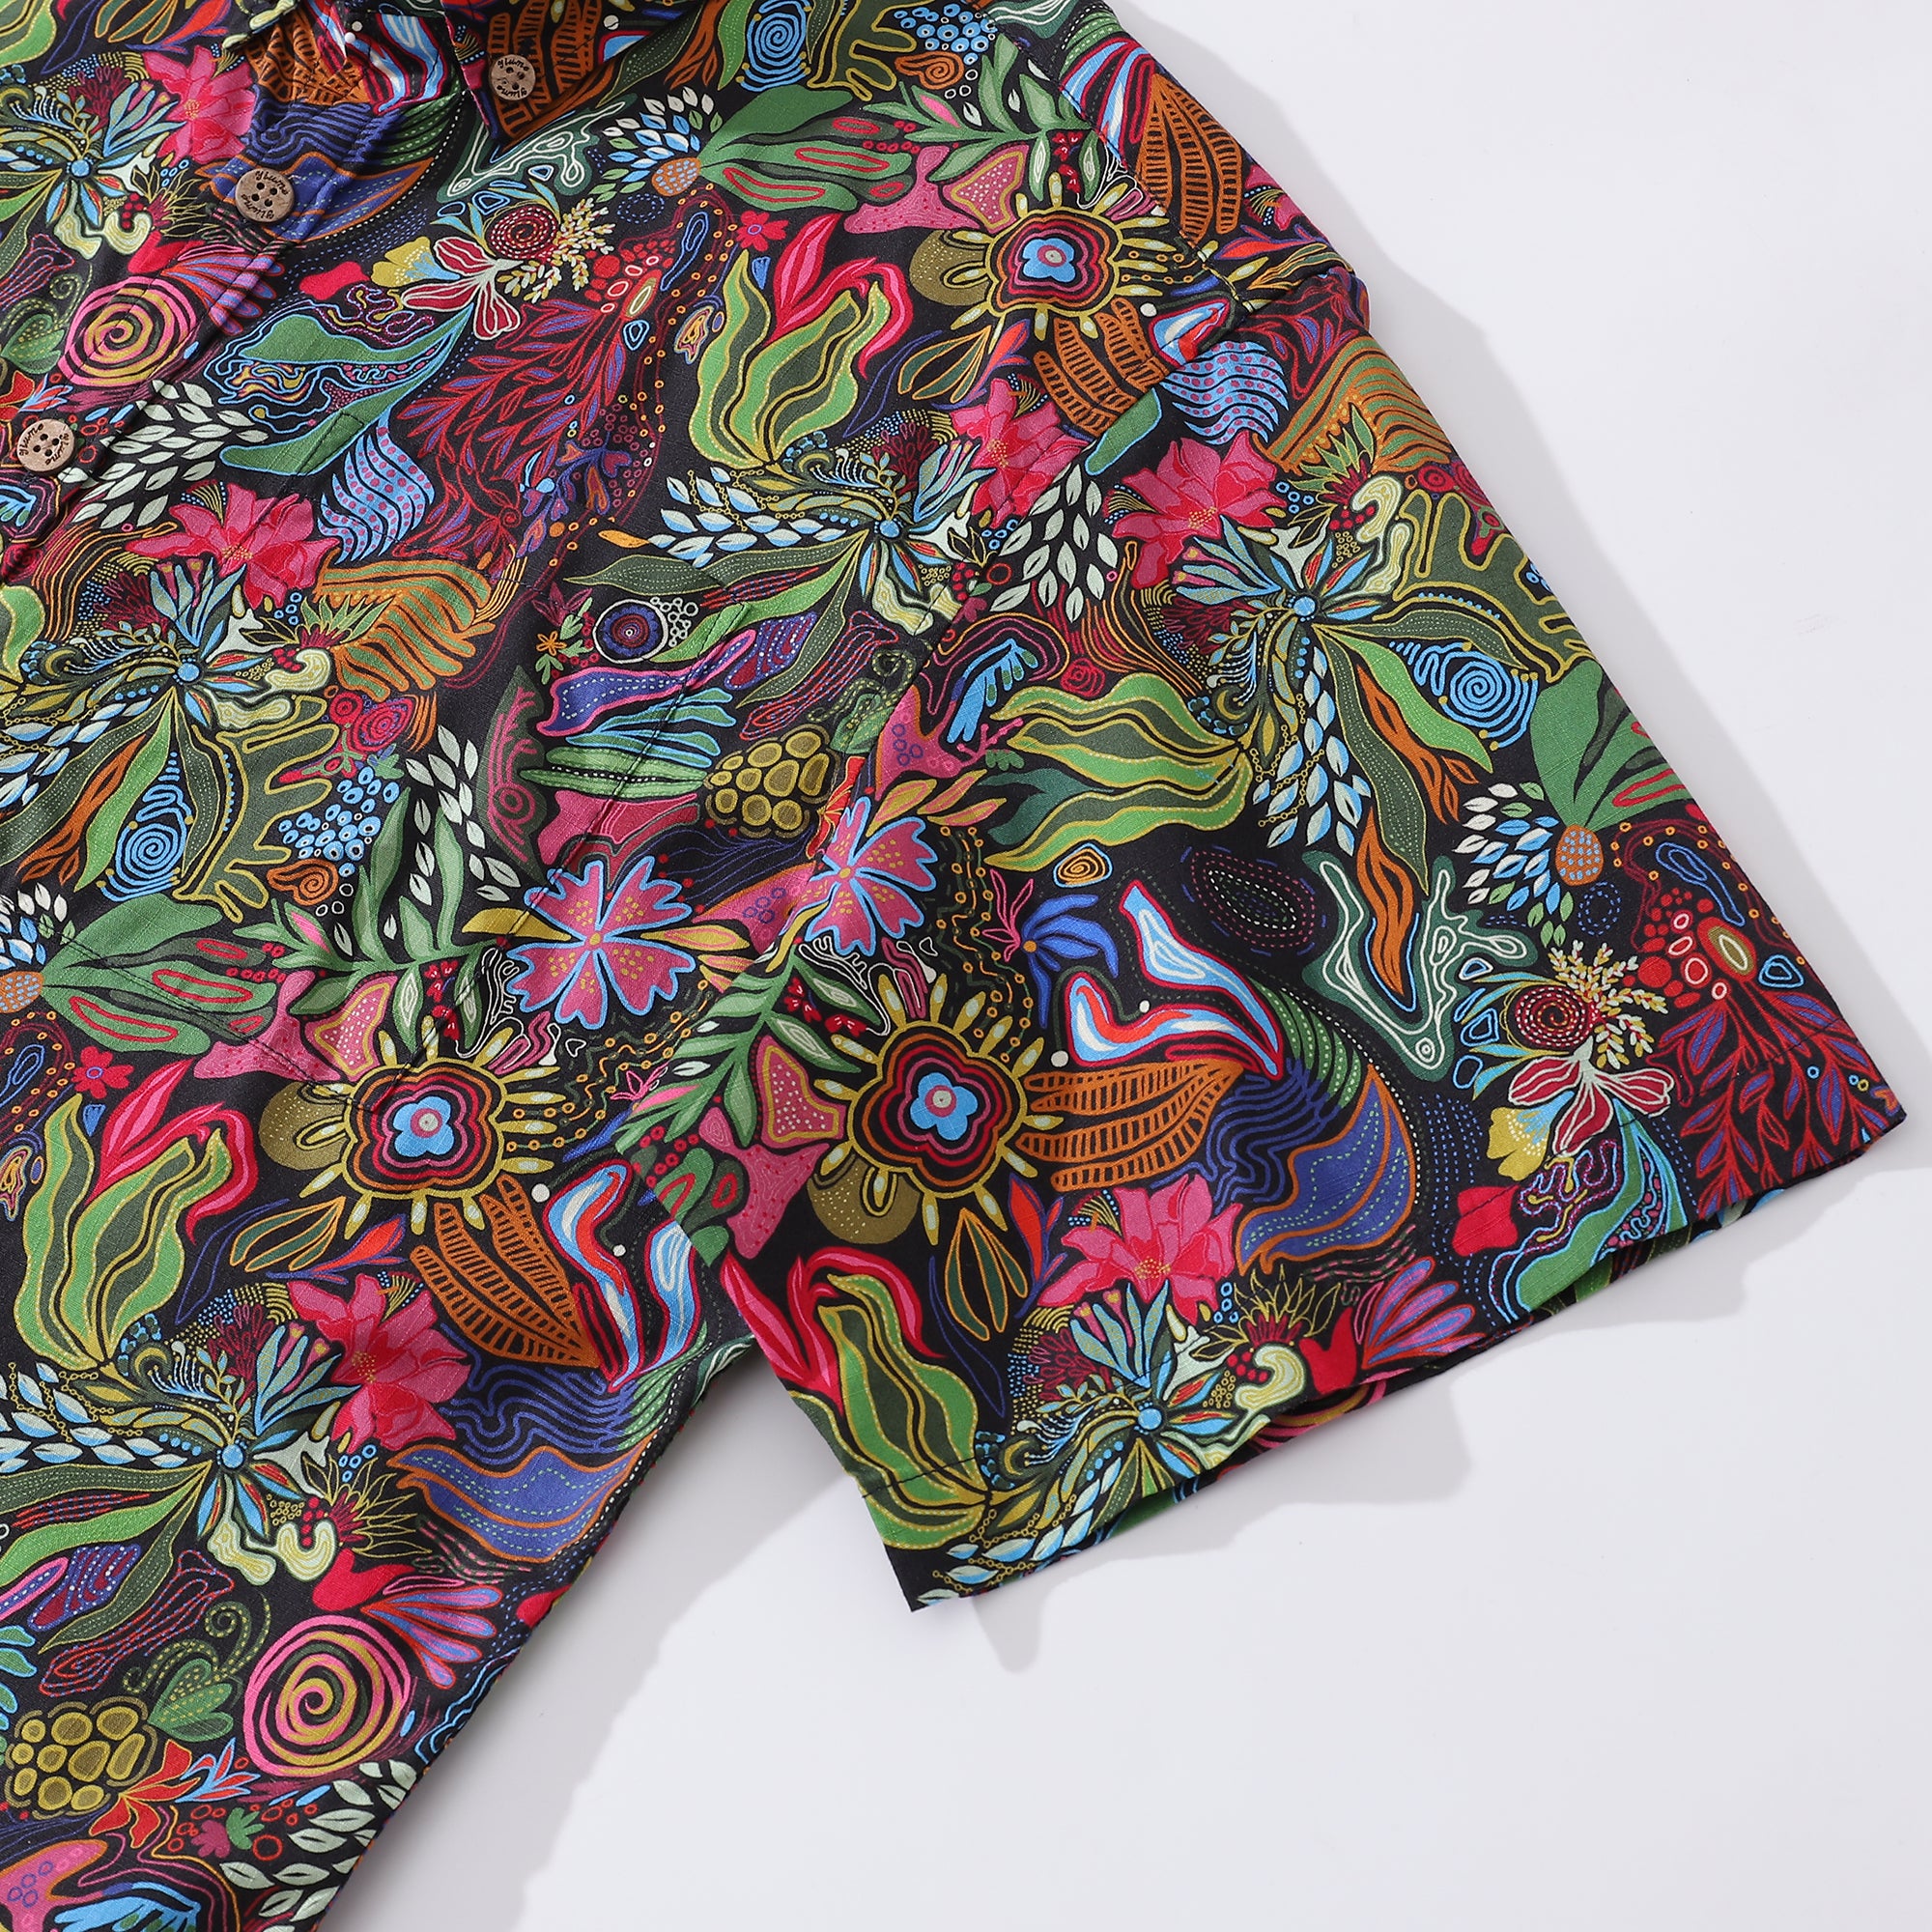 1950s Hawaiian Shirt For Men Josephine George Plants Cotton Button-down Short Sleeve Floral Shirt